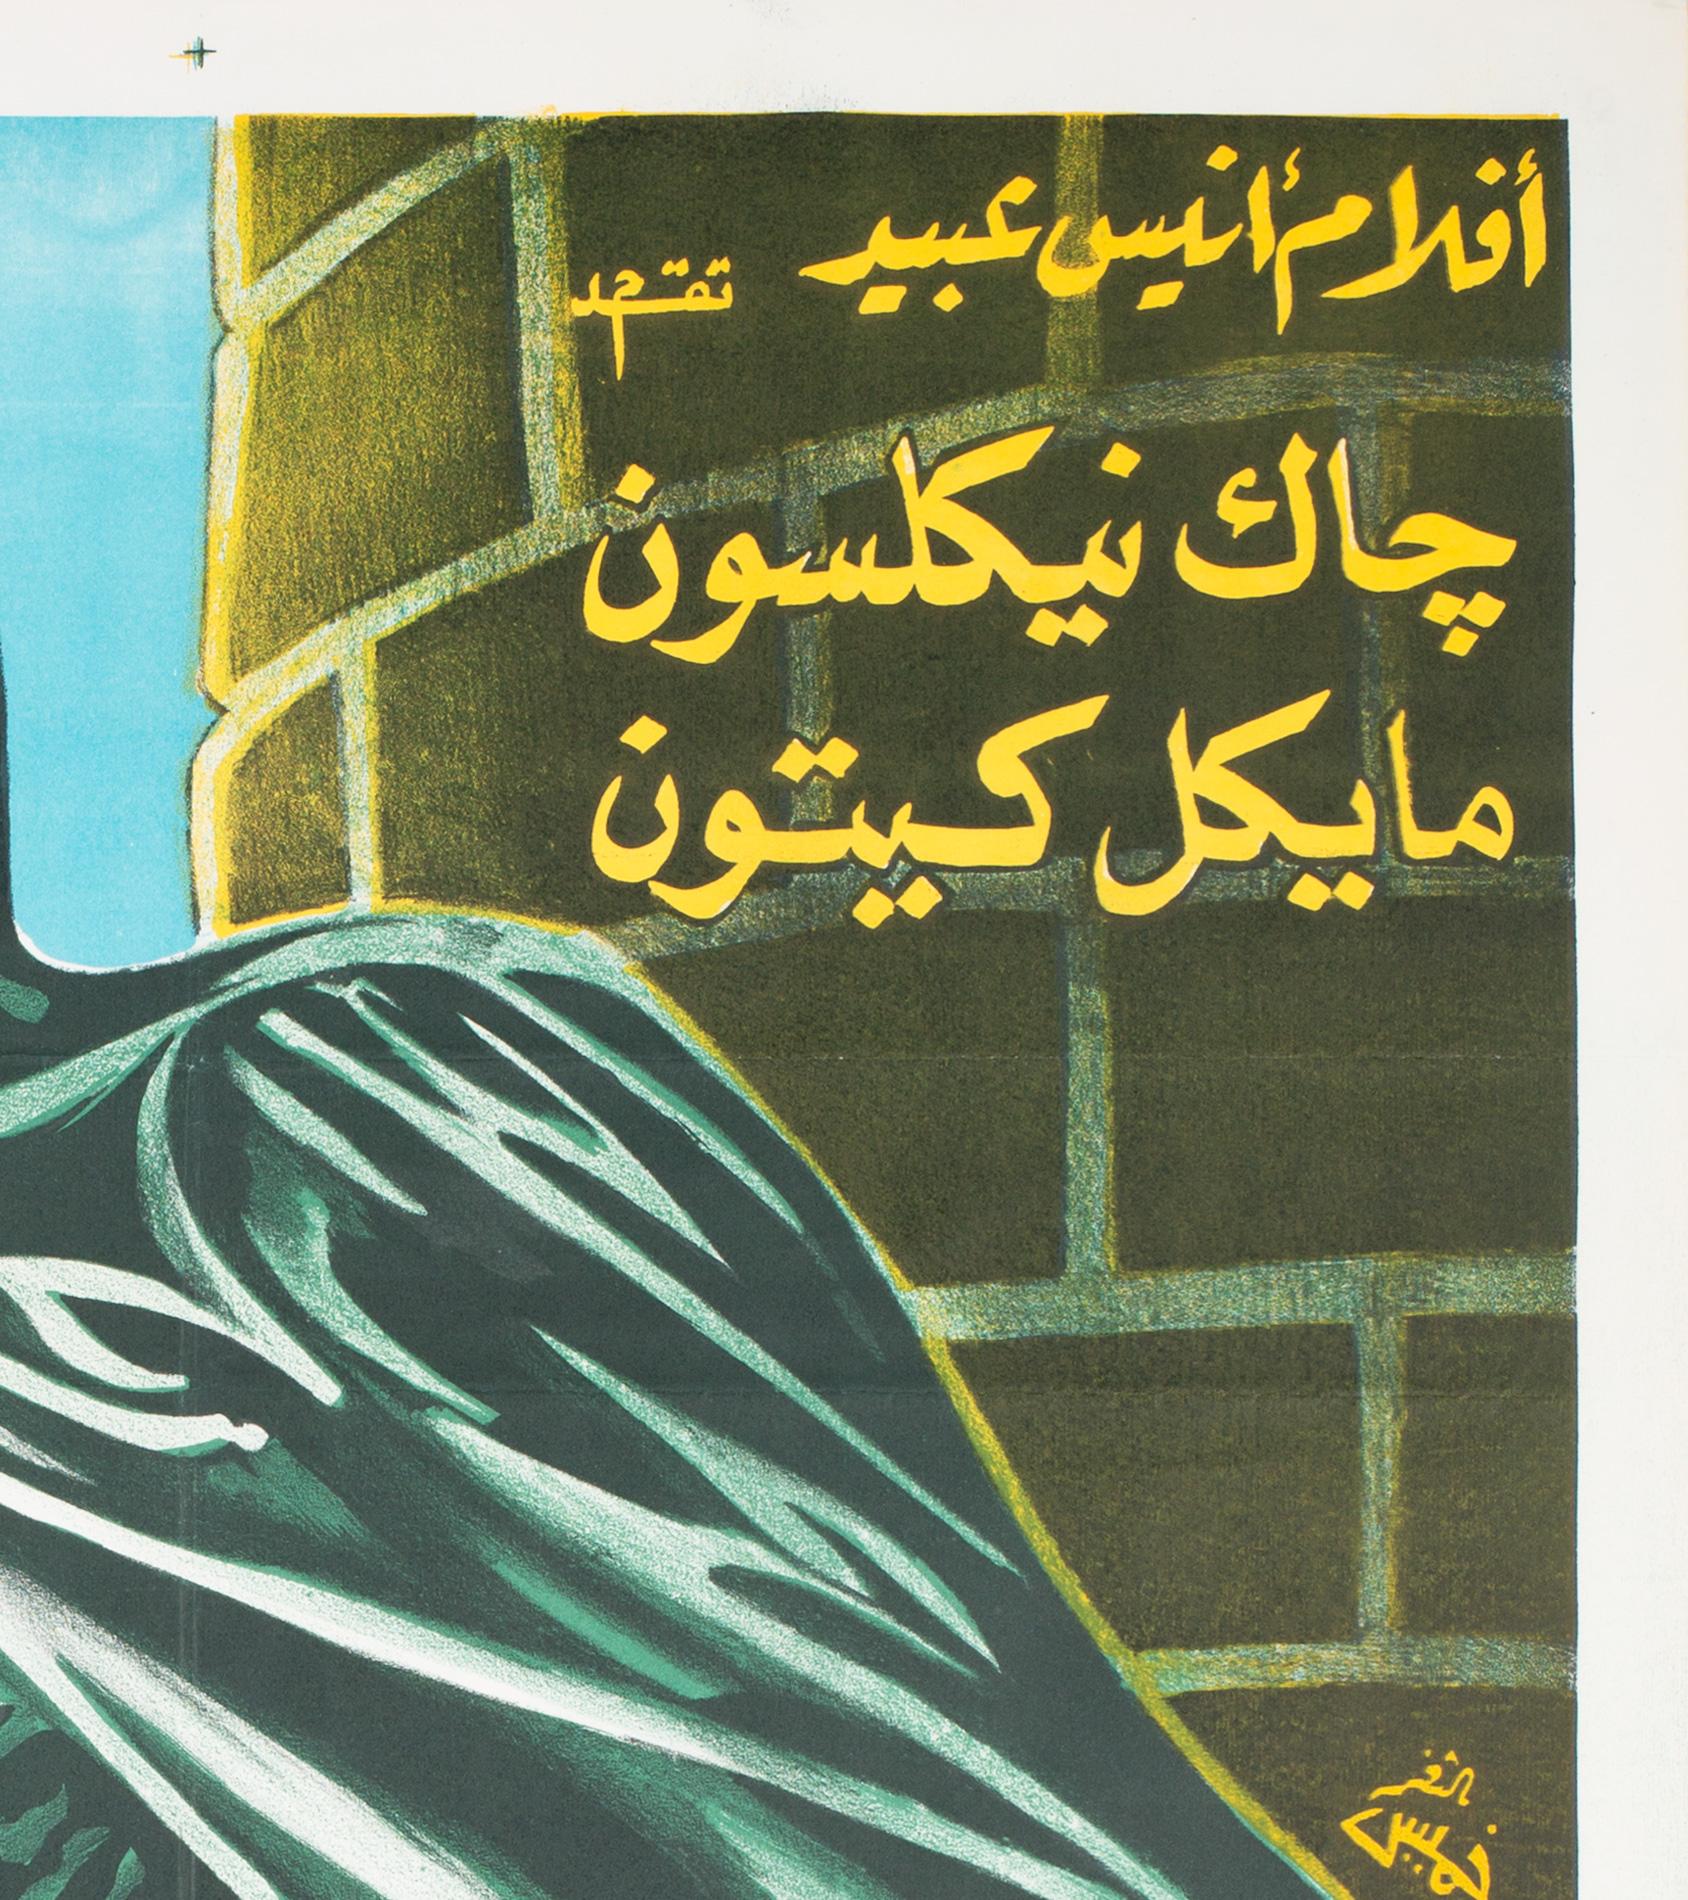 Batman Original Egyptian Film Movie Poster, 1989 2